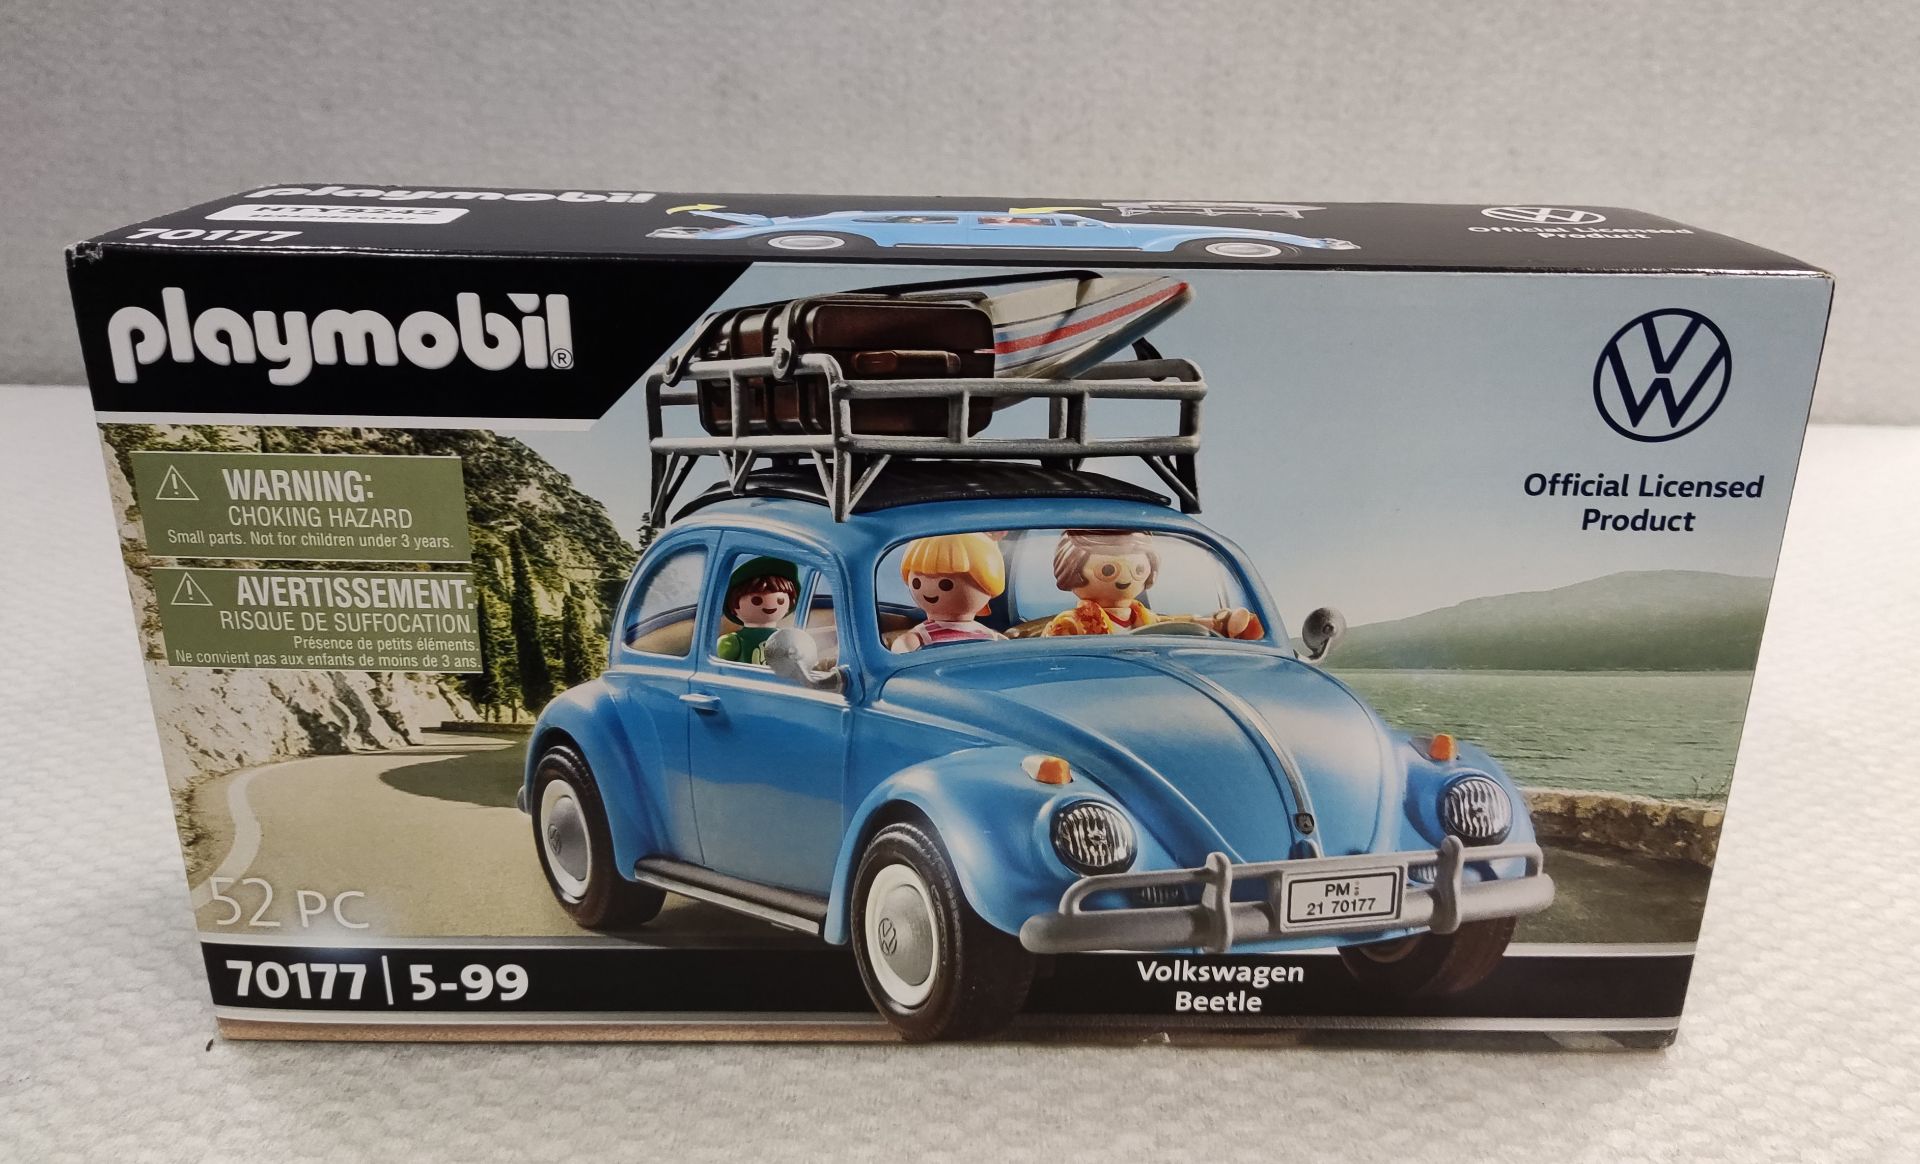 1 x Playmobil Volkswagen Beetle - Model 70177 - New/Boxed - Image 2 of 6